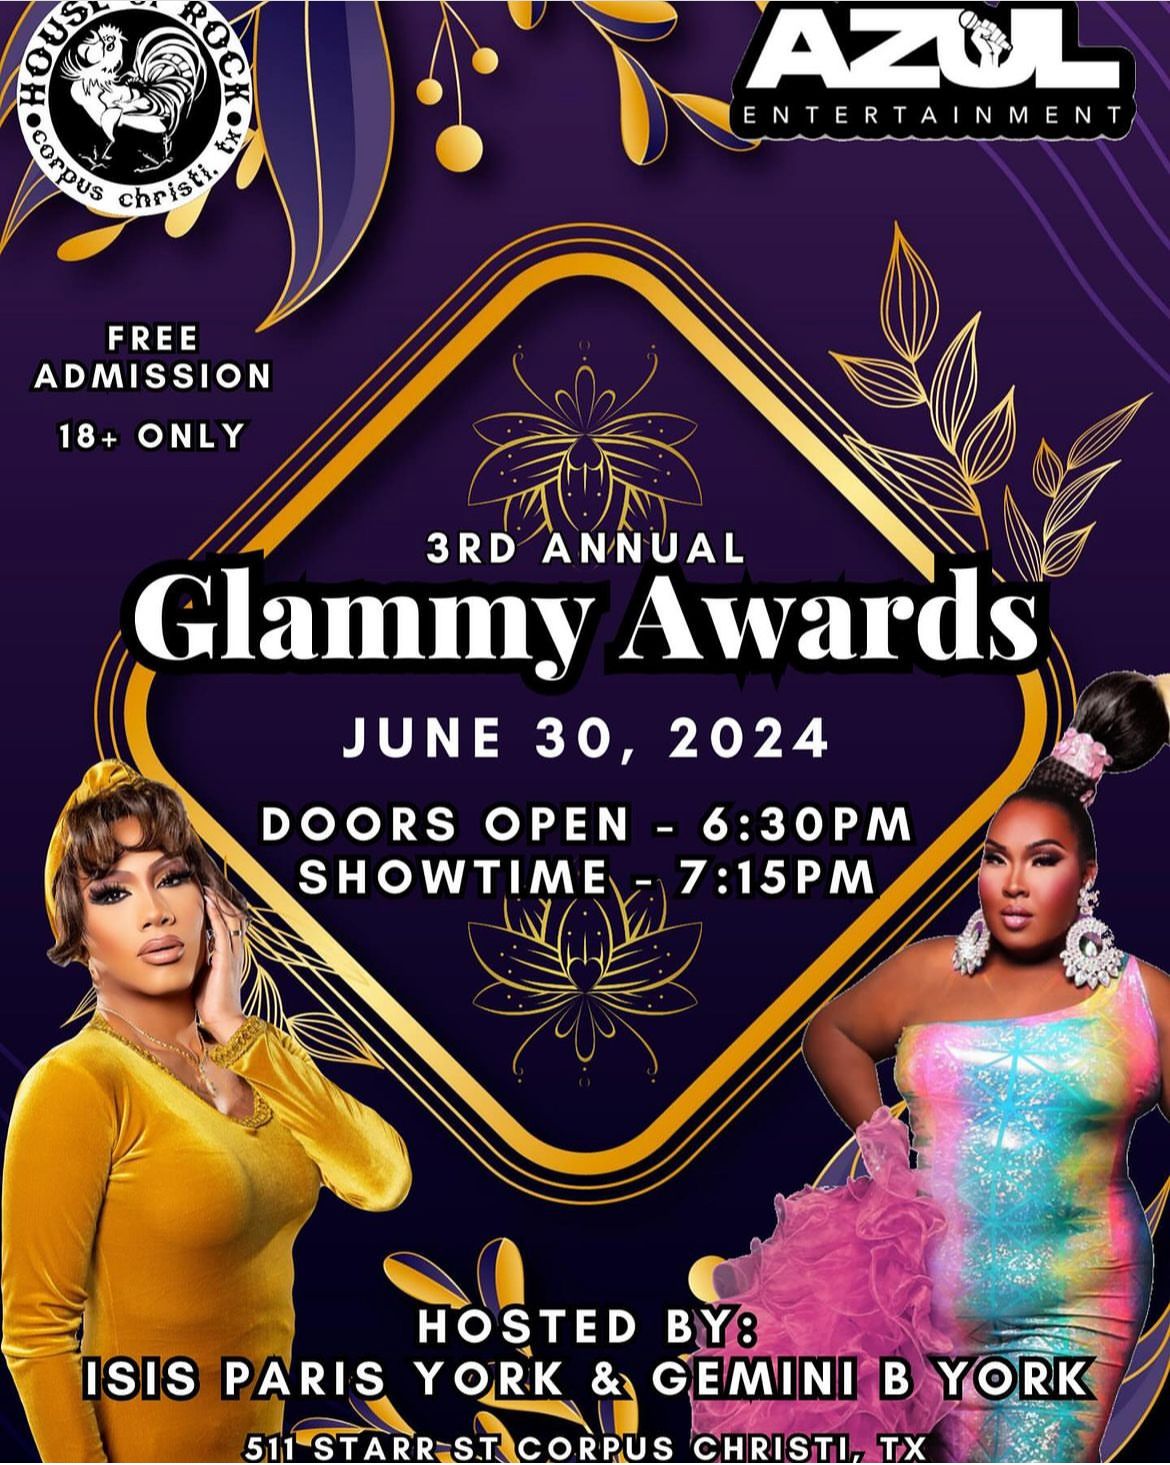 Azul Entertainment presents The Glammy Awards 